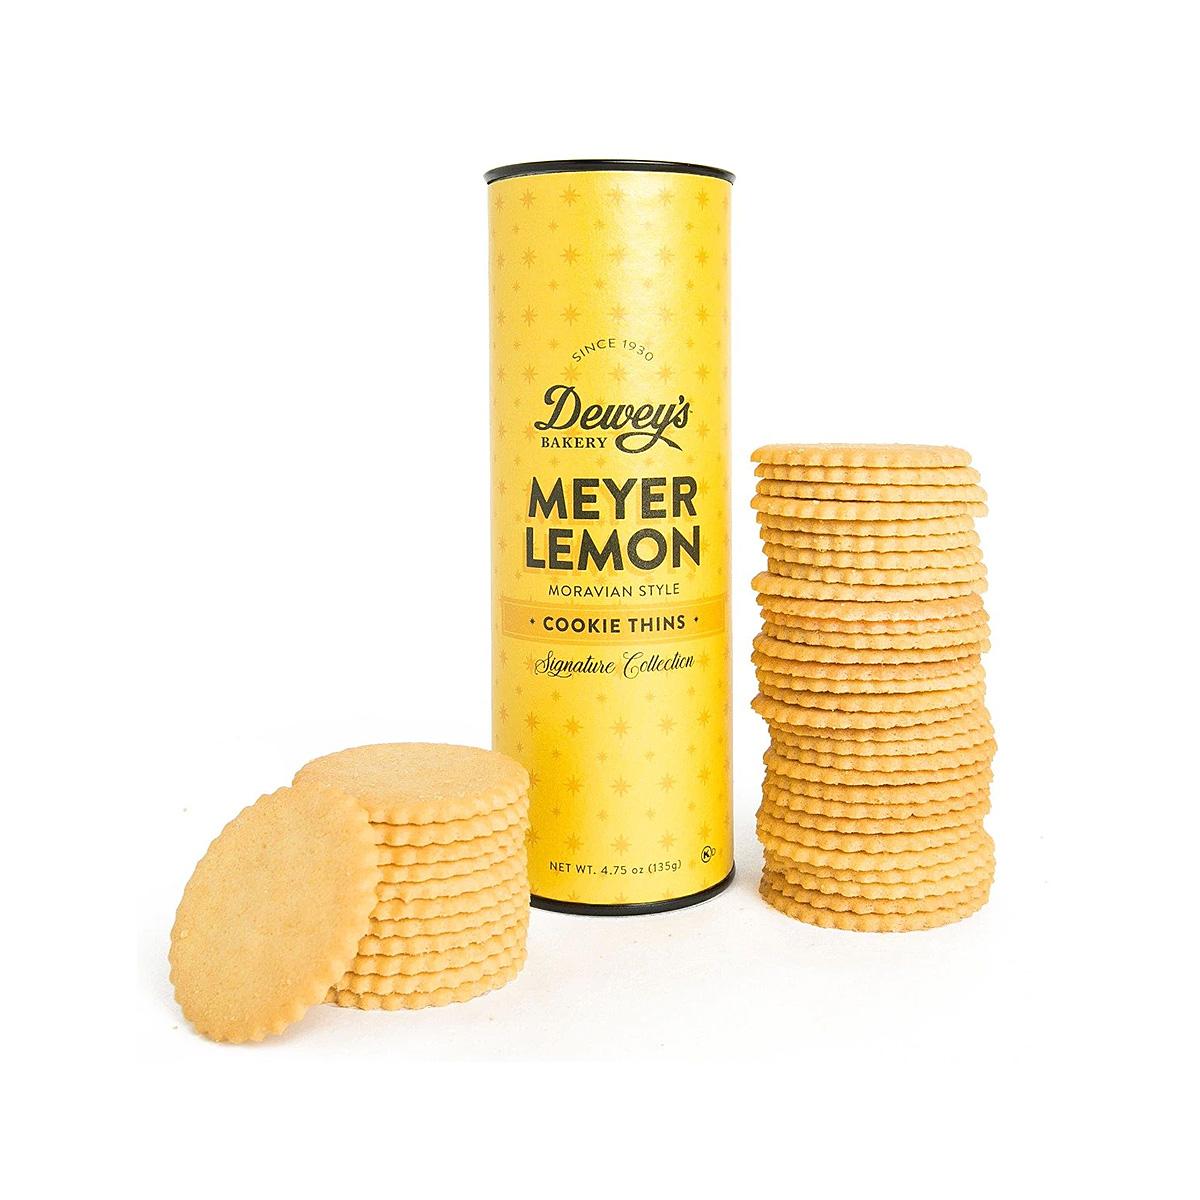  Meyer Lemon Moravian Cookies - Large Tube